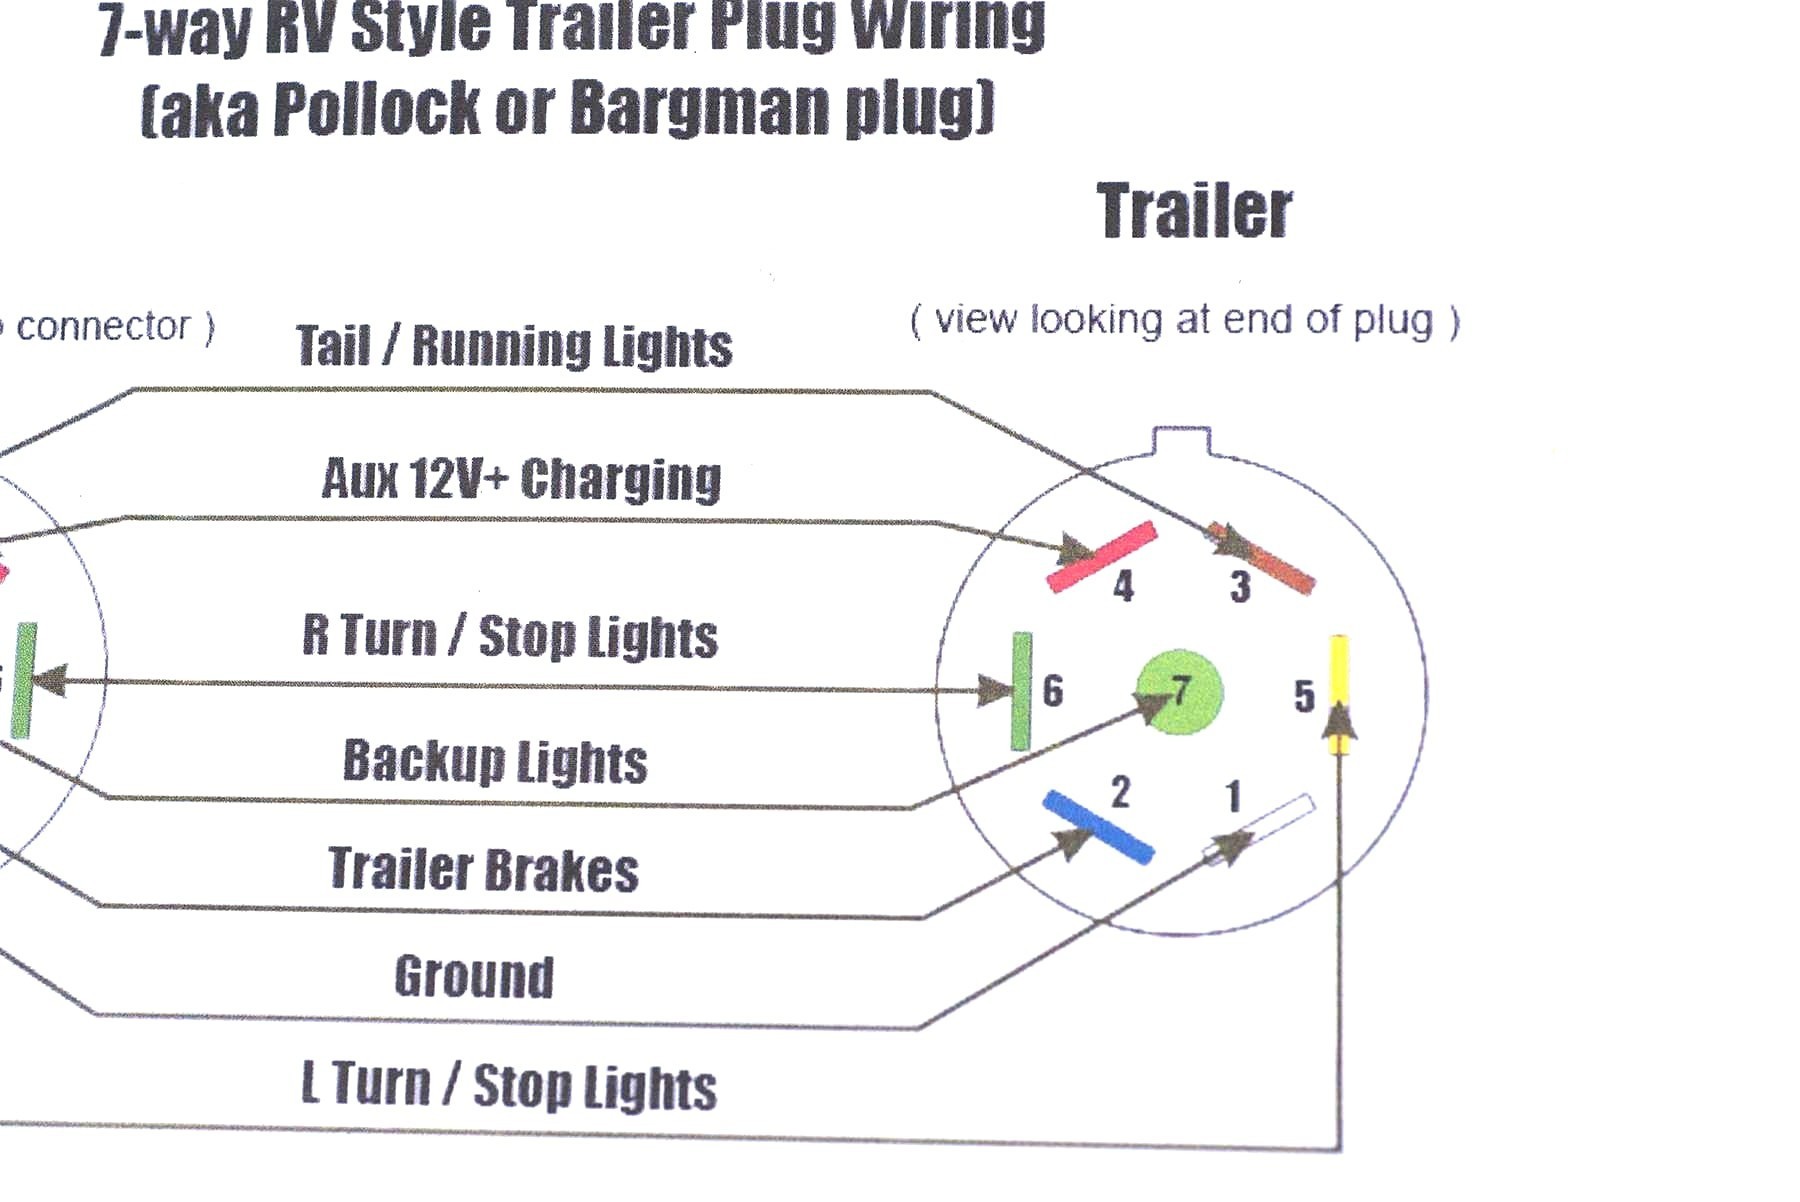 Wiring Diagram 7 Pin Plug Australia Inspirationa Wiring Diagram for Hopkins Trailer Plug Fresh 7 Pin